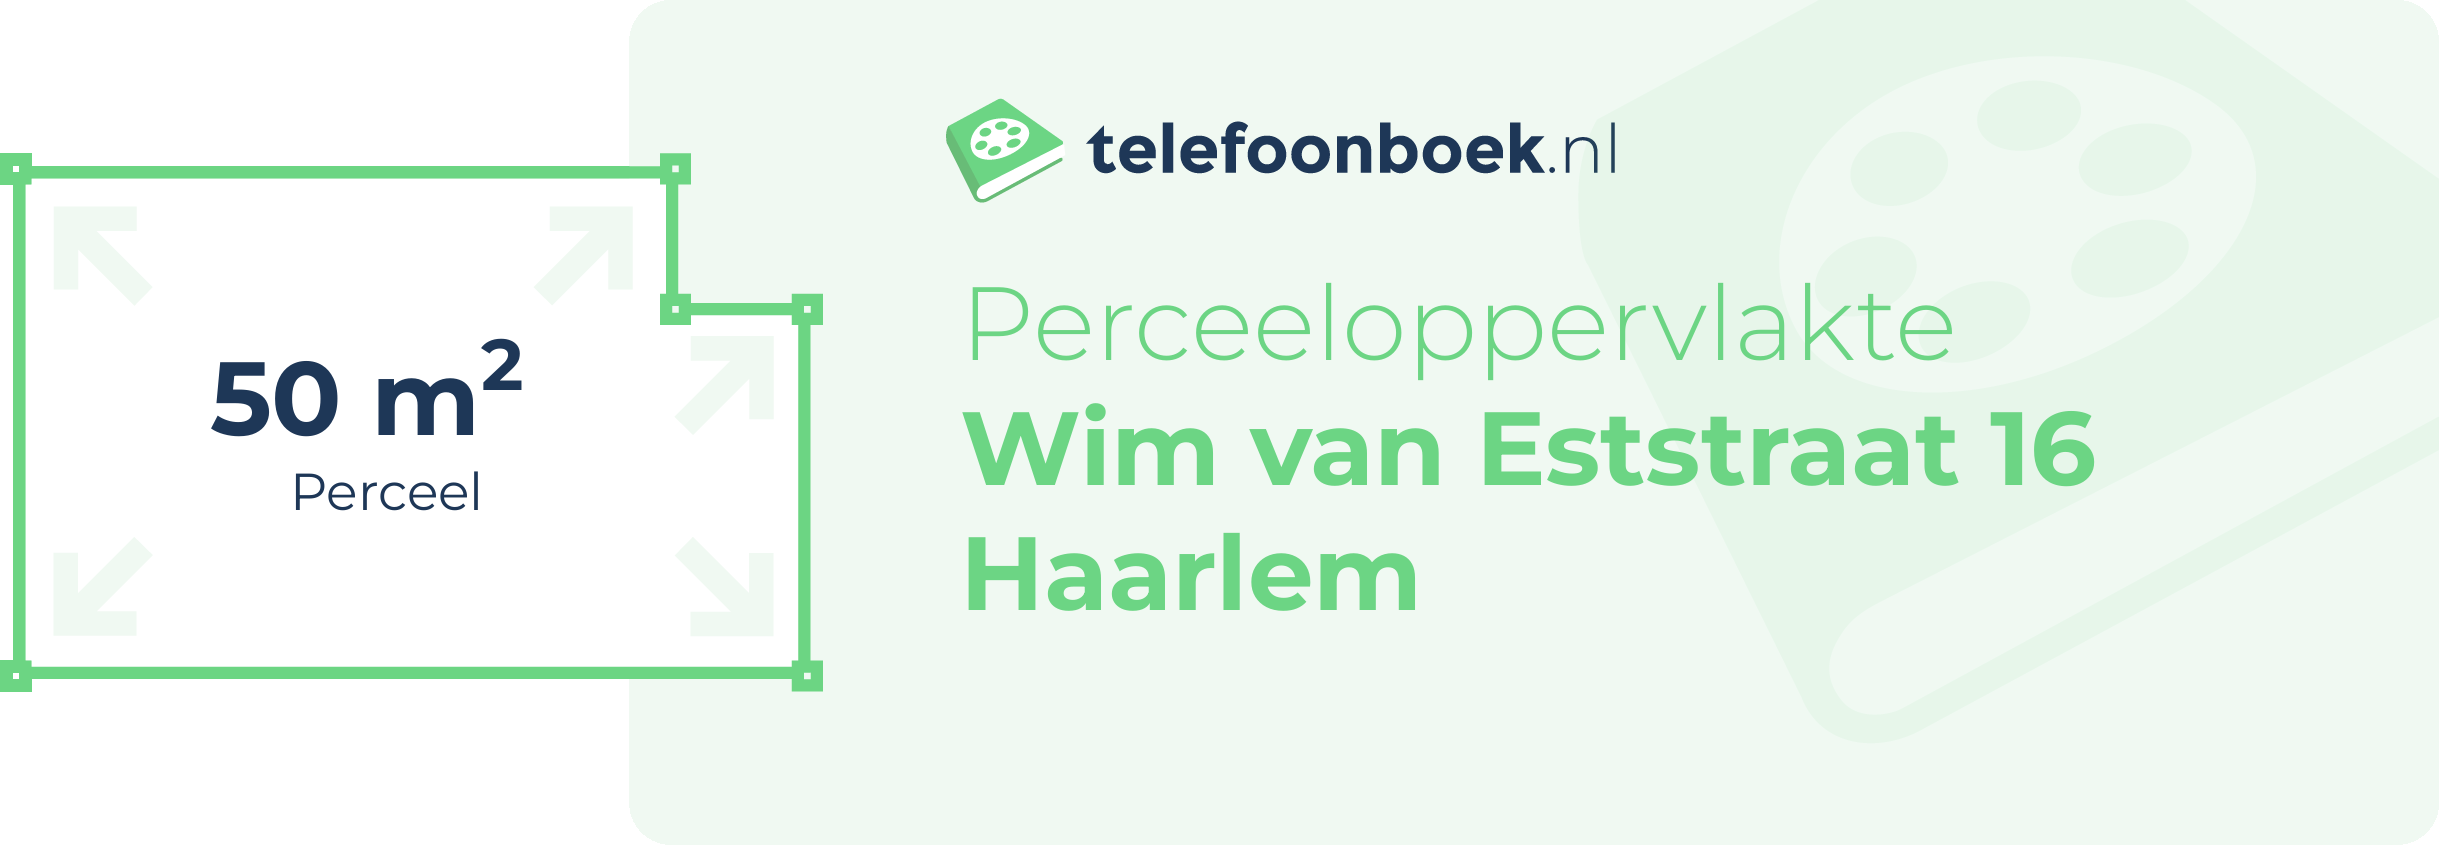 Perceeloppervlakte Wim Van Eststraat 16 Haarlem